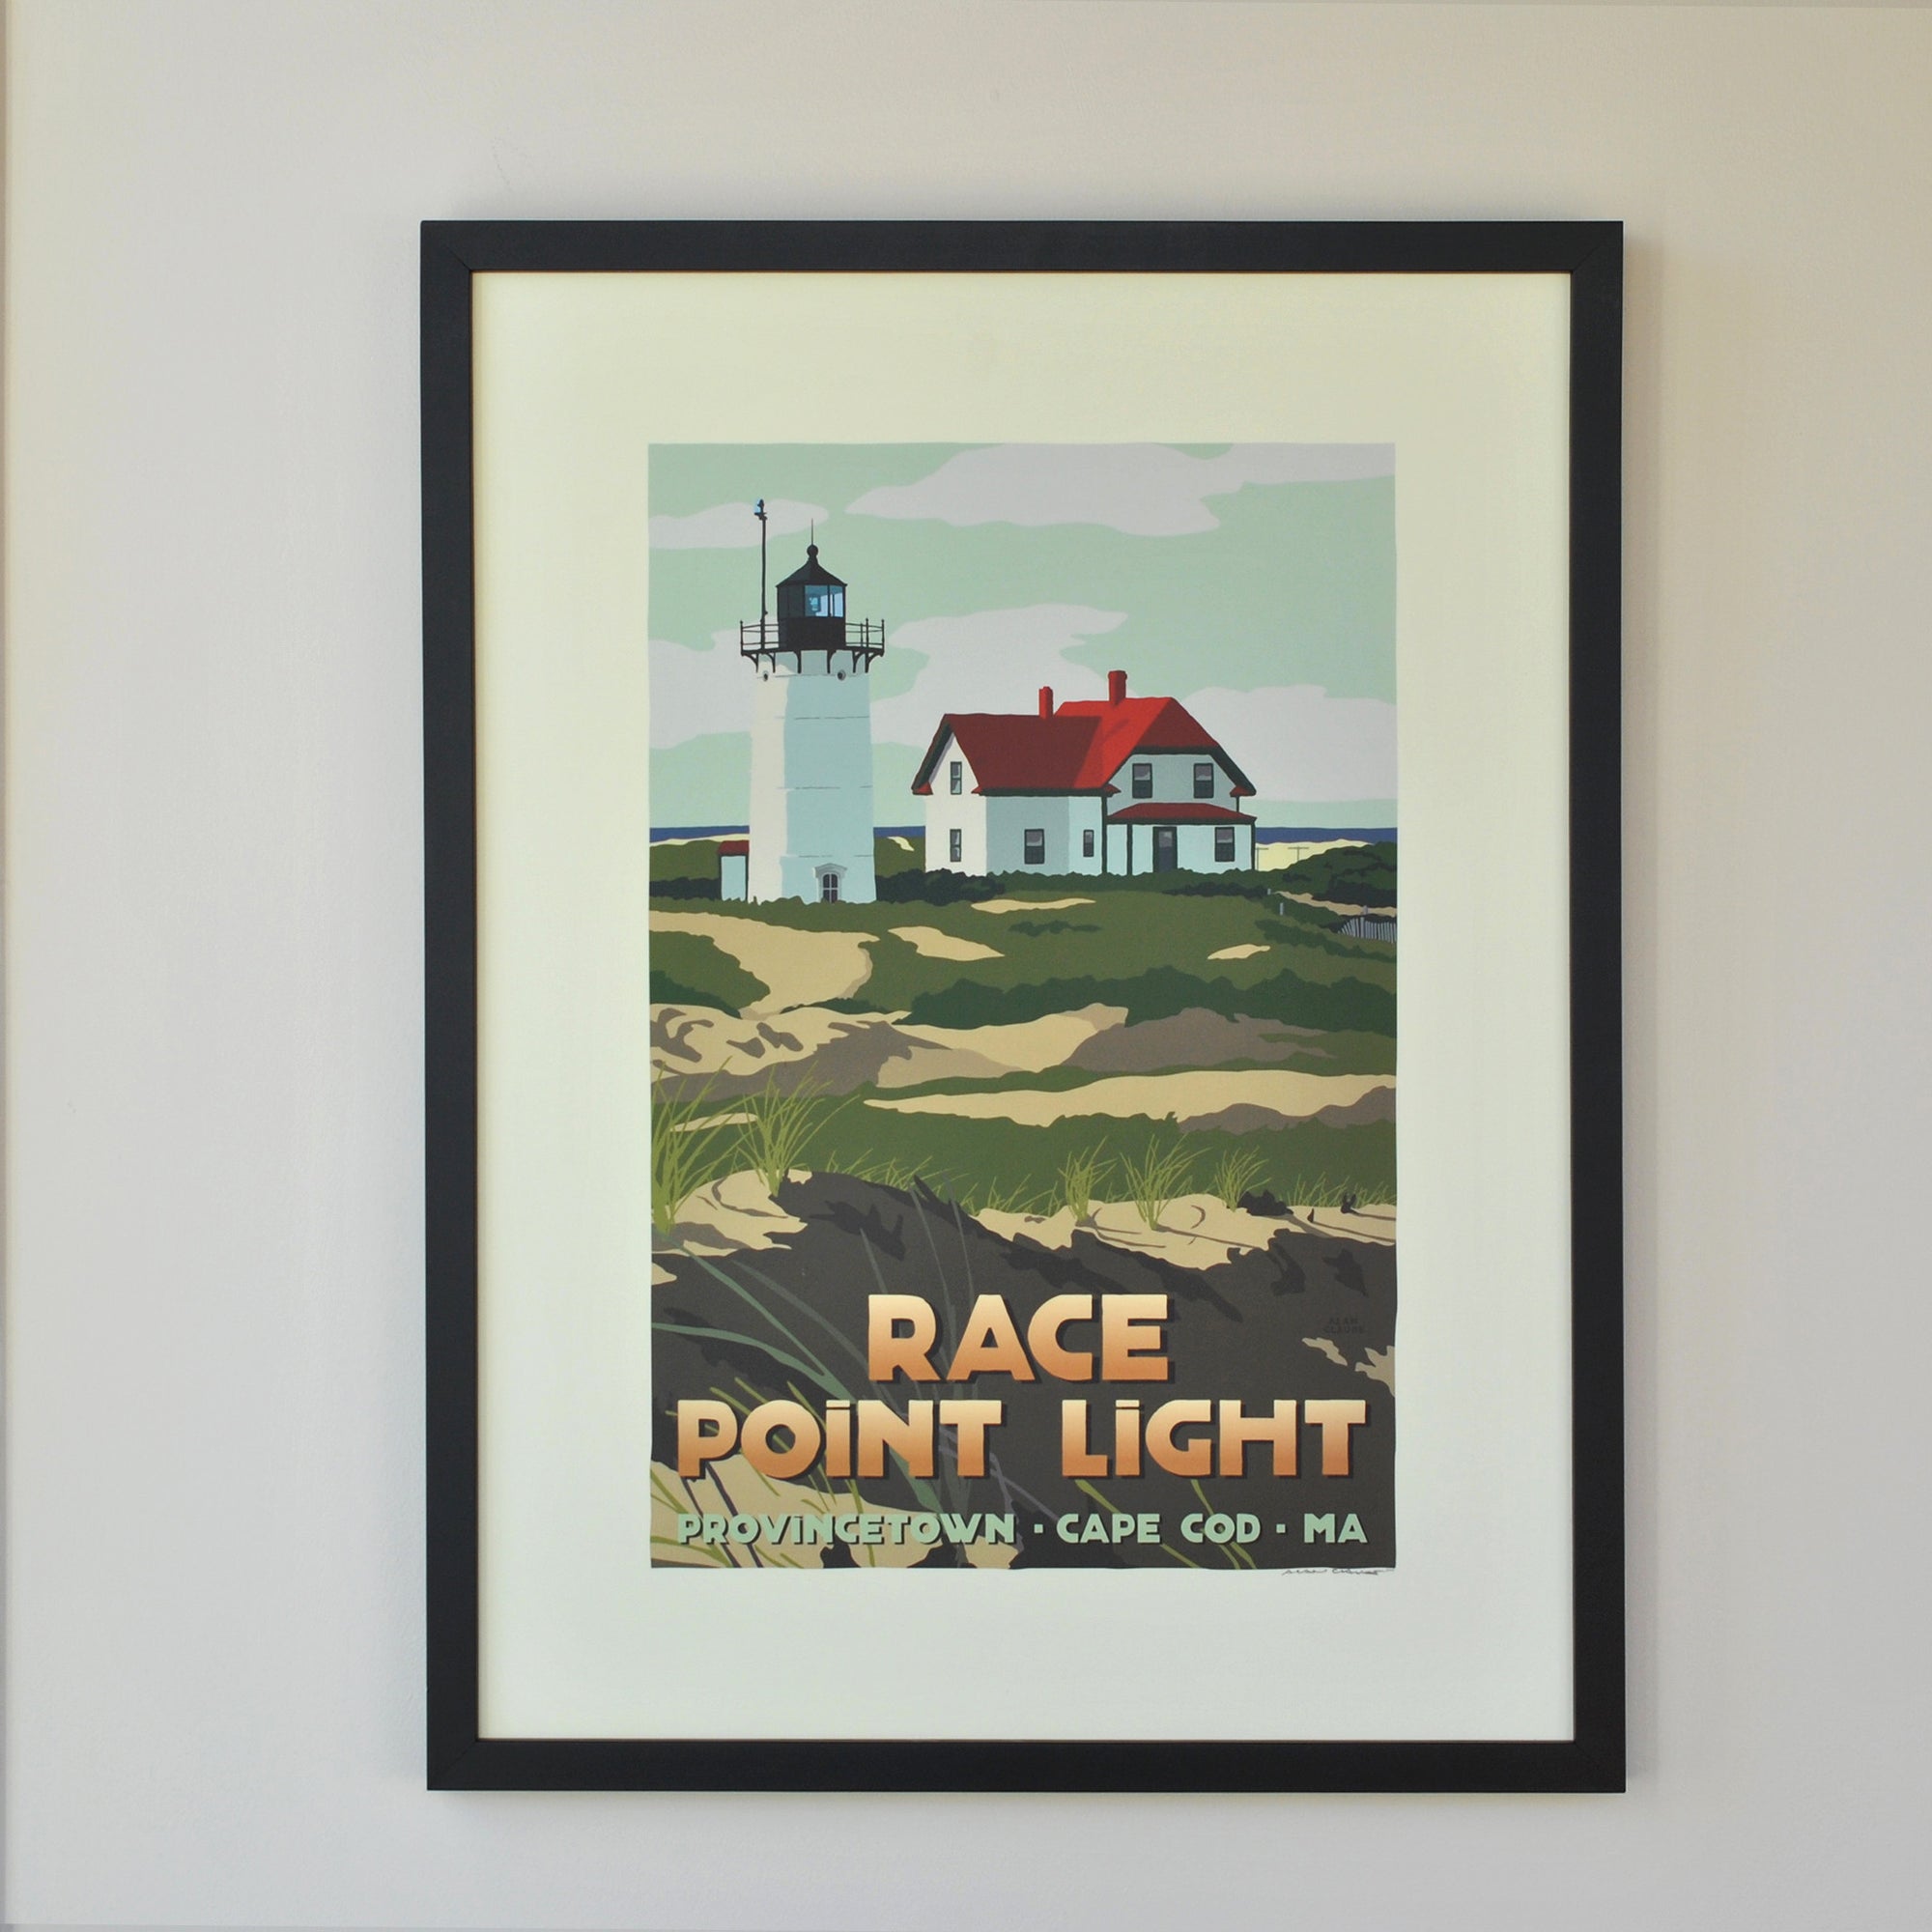 Race Point Light Art Print 18" x 24" Framed Travel Poster By Alan Claude - Massachusetts